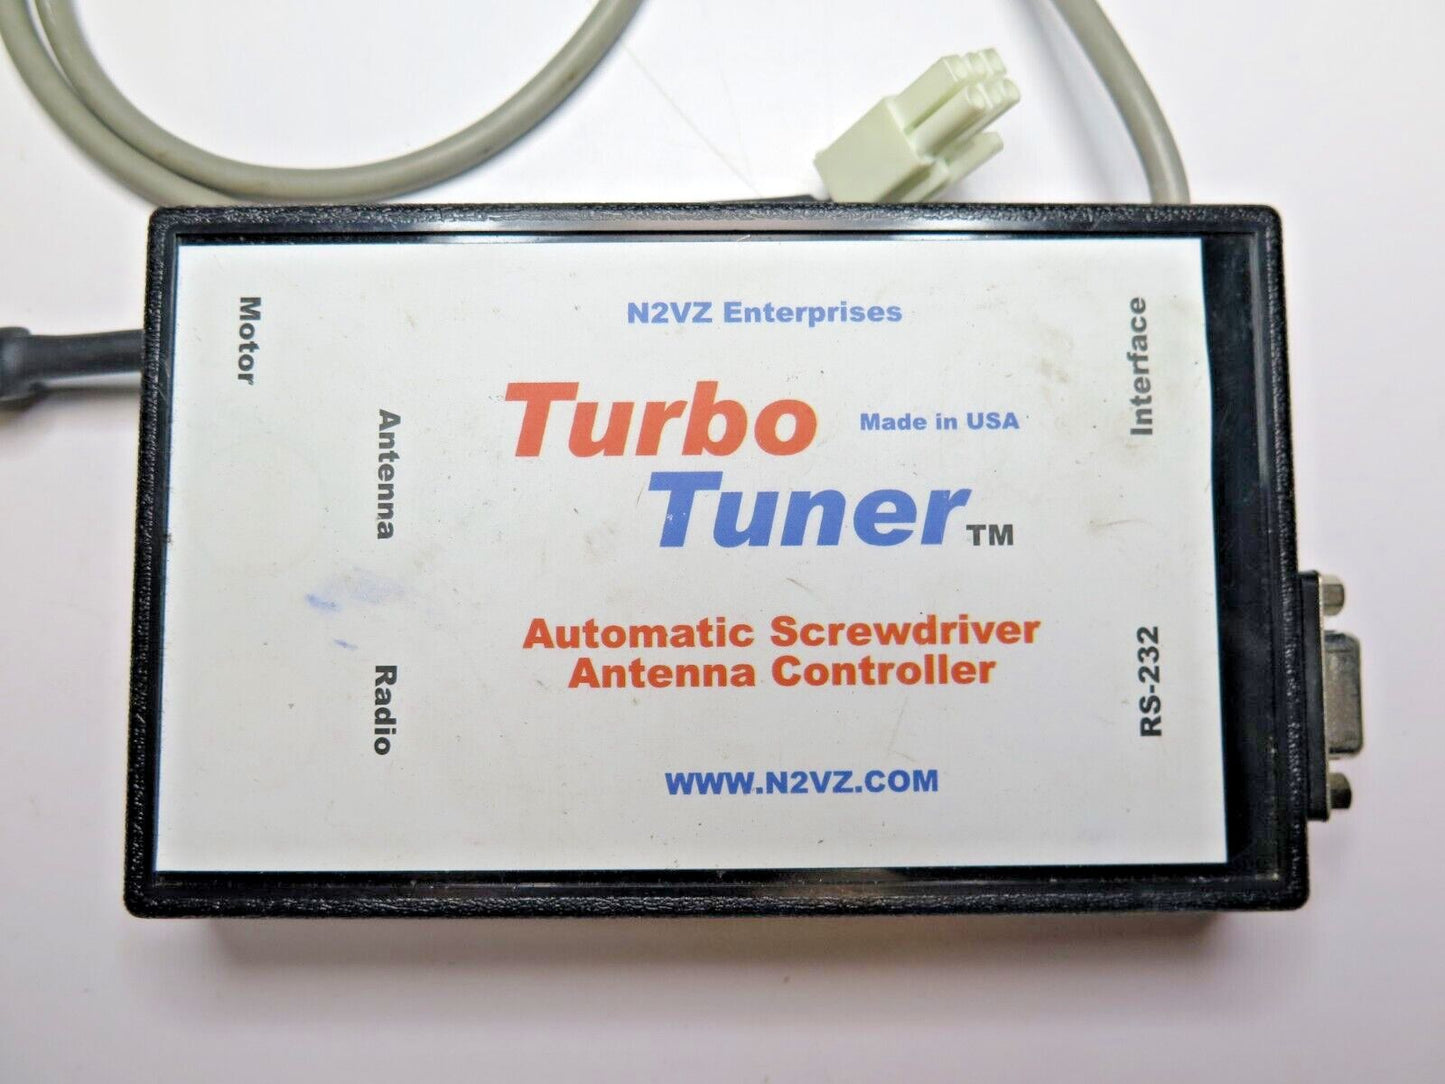 N2VZ Enterprises Turbo Tuner - Auto Screwdriver Antenna Controller- Yaesu